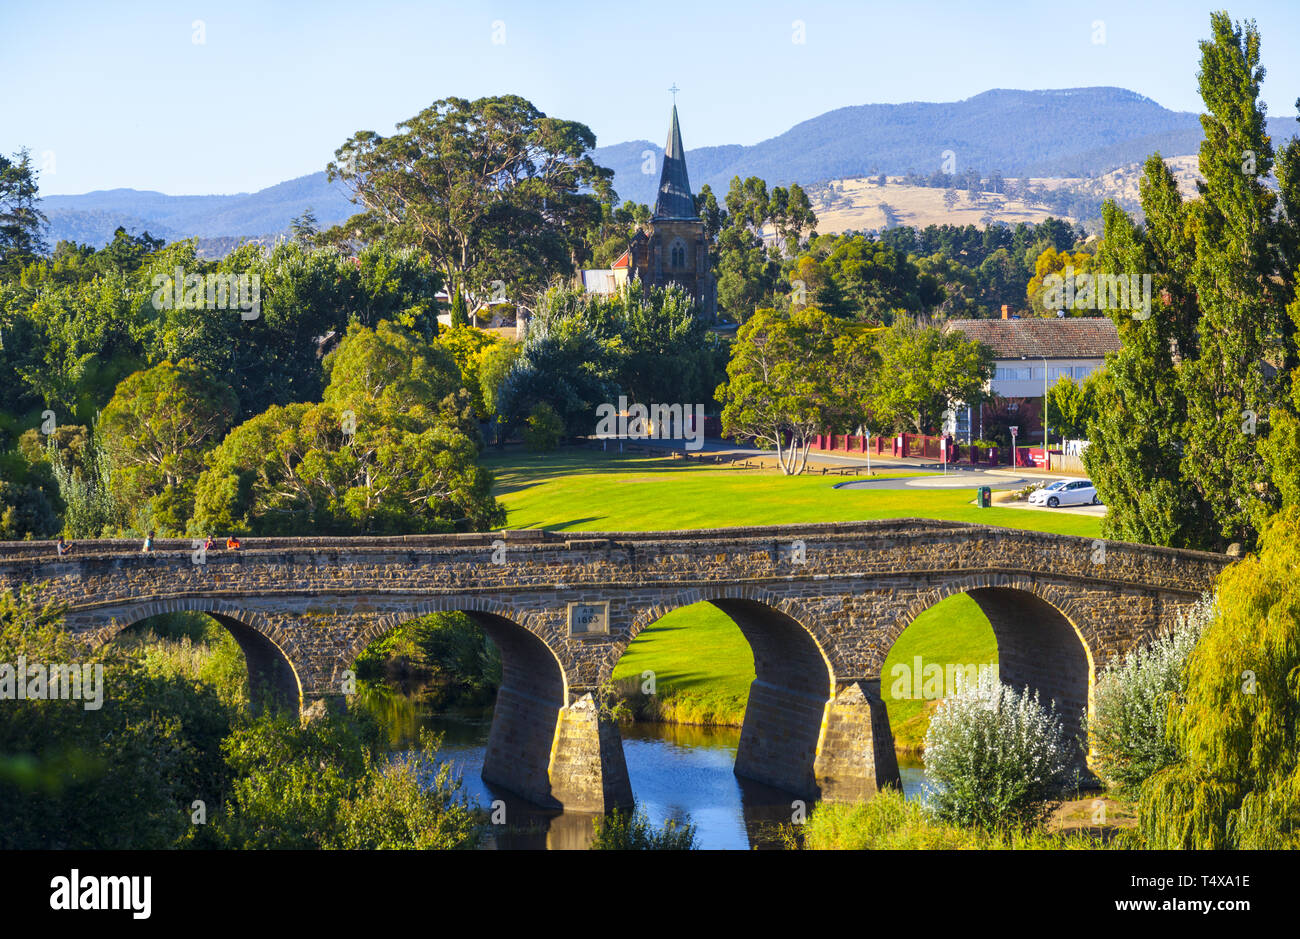 Richmond, Tasmania, Australia: Completed in 1825, The Richmond Bridge is the oldest stone span bridge in Australia. Stock Photo